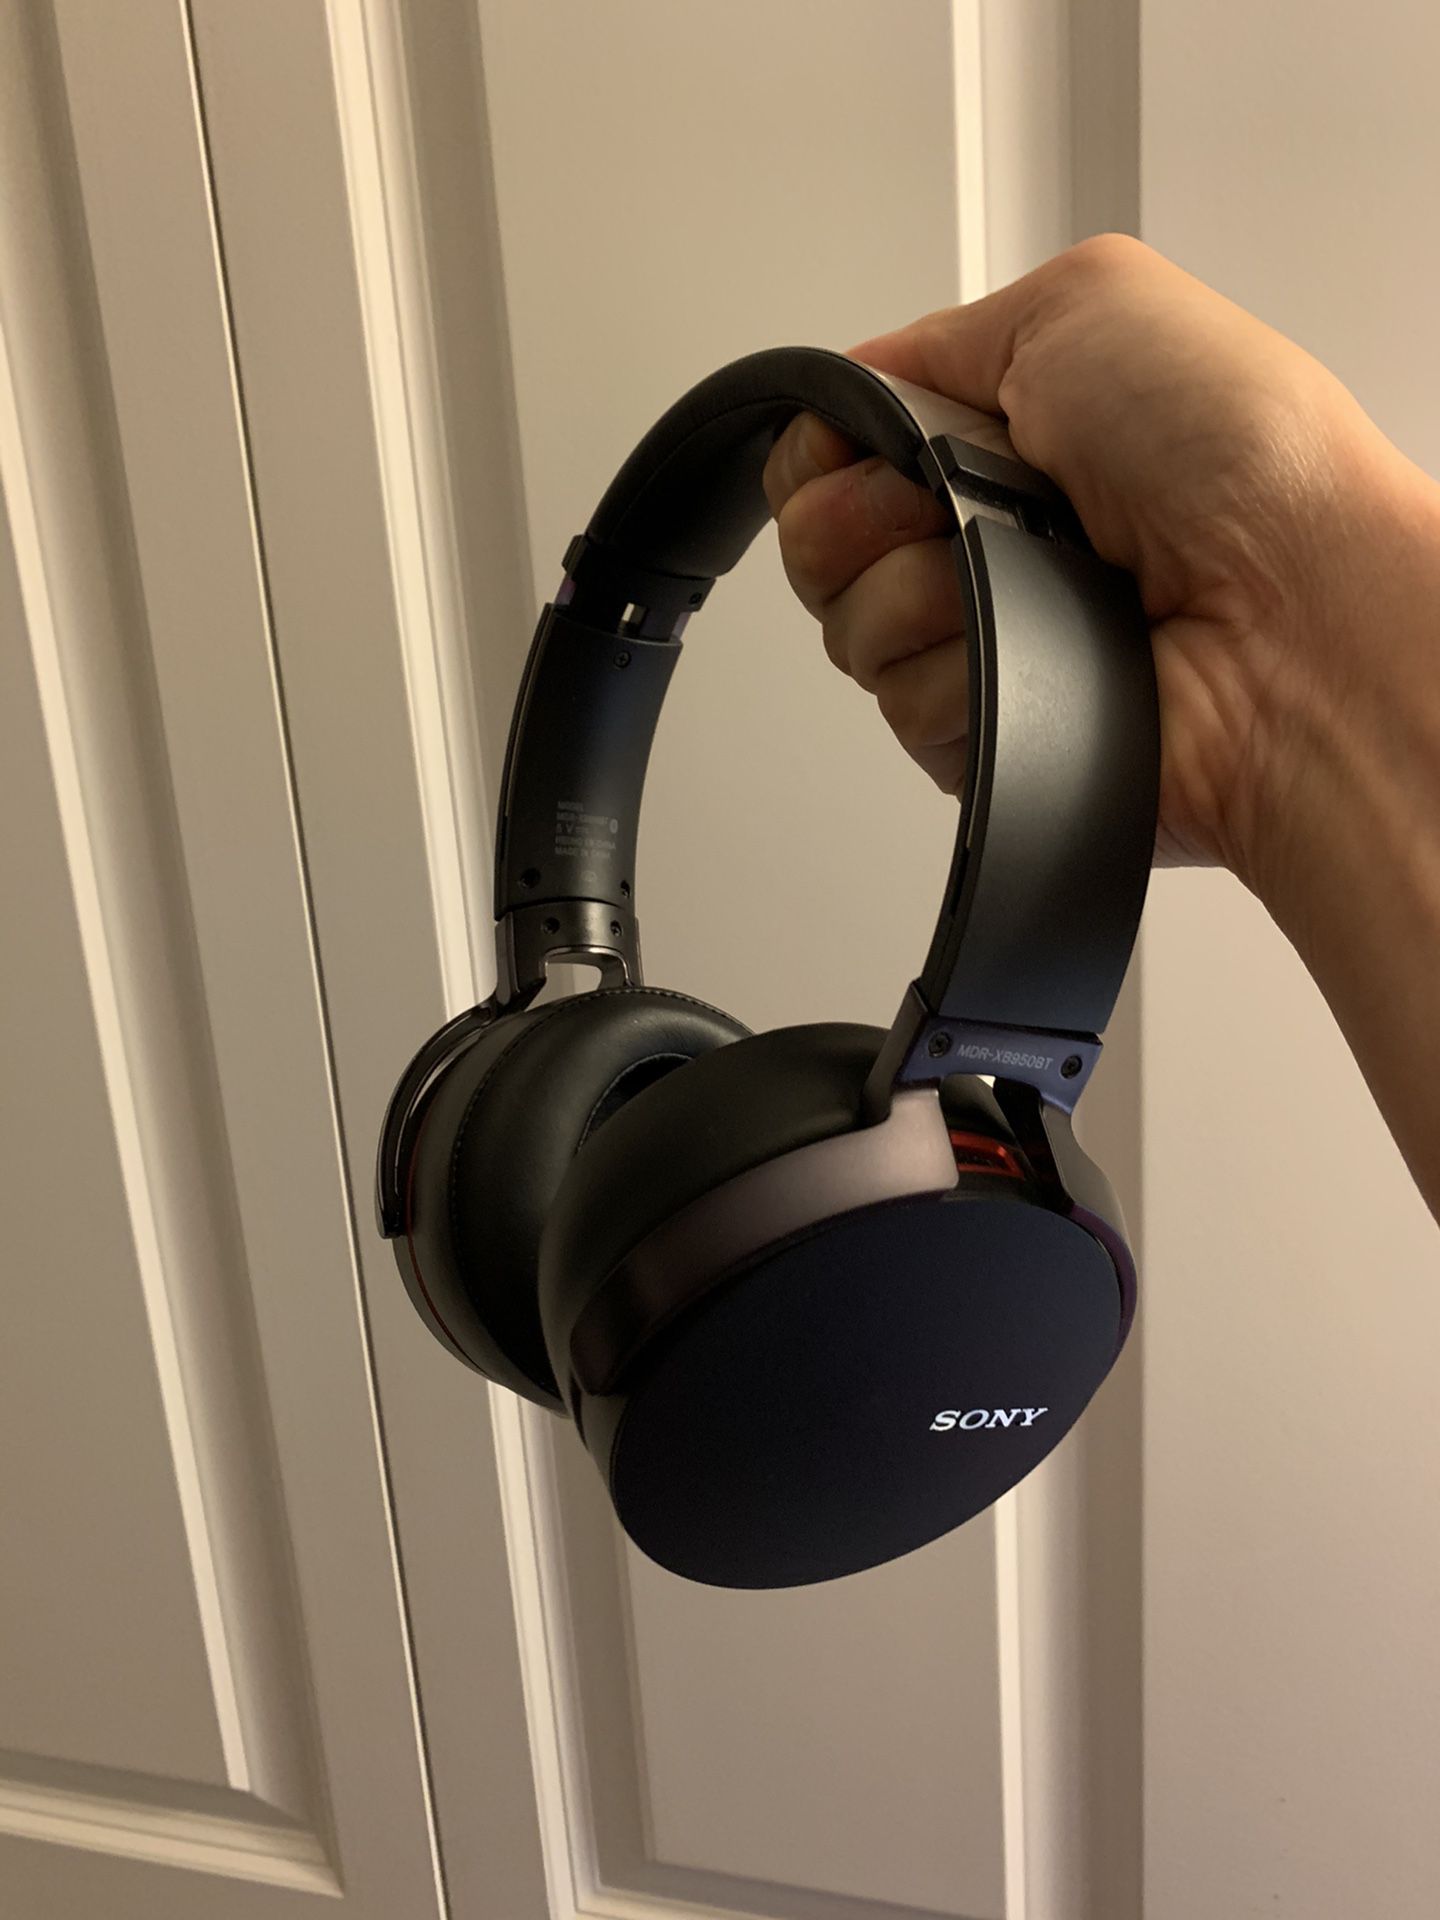 SONY XB950B1 Wireless headphones